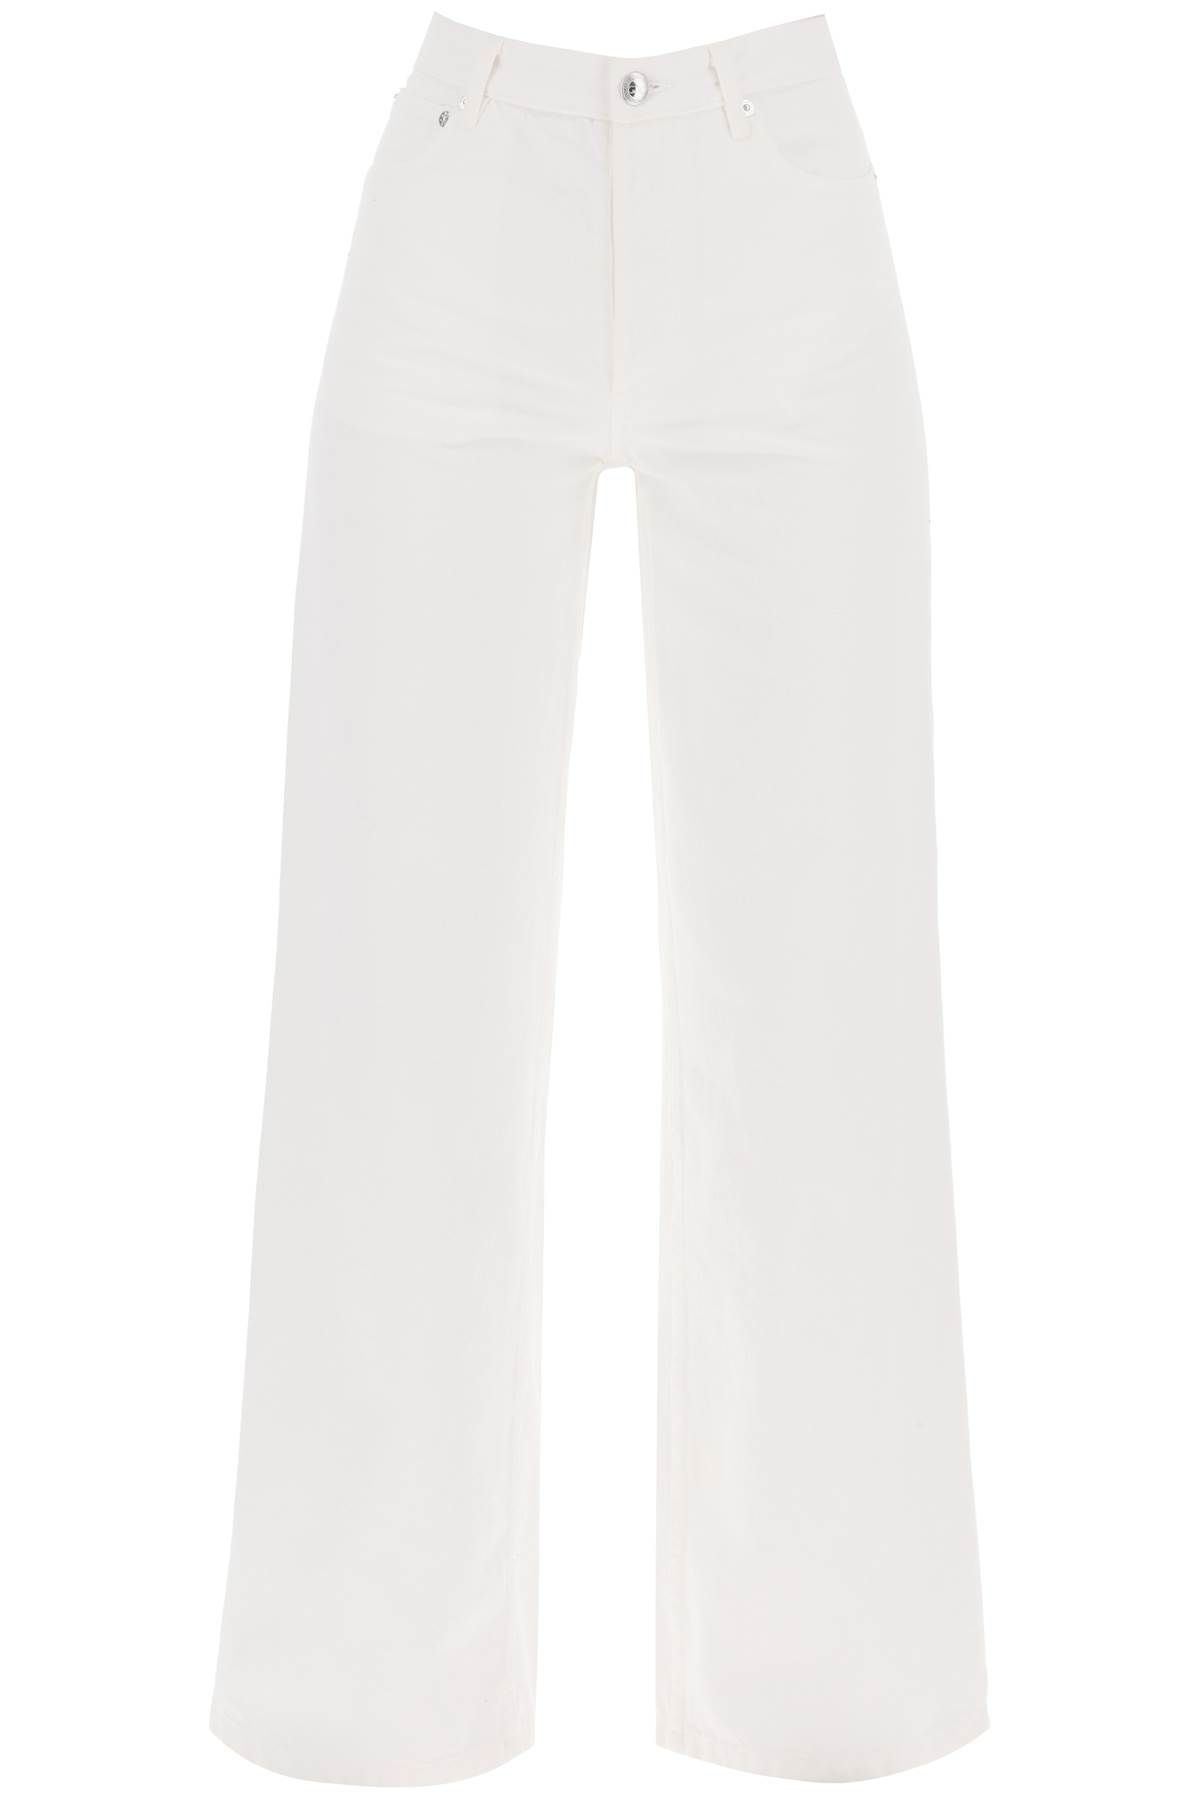 Apc Elisabeth Jeans In White